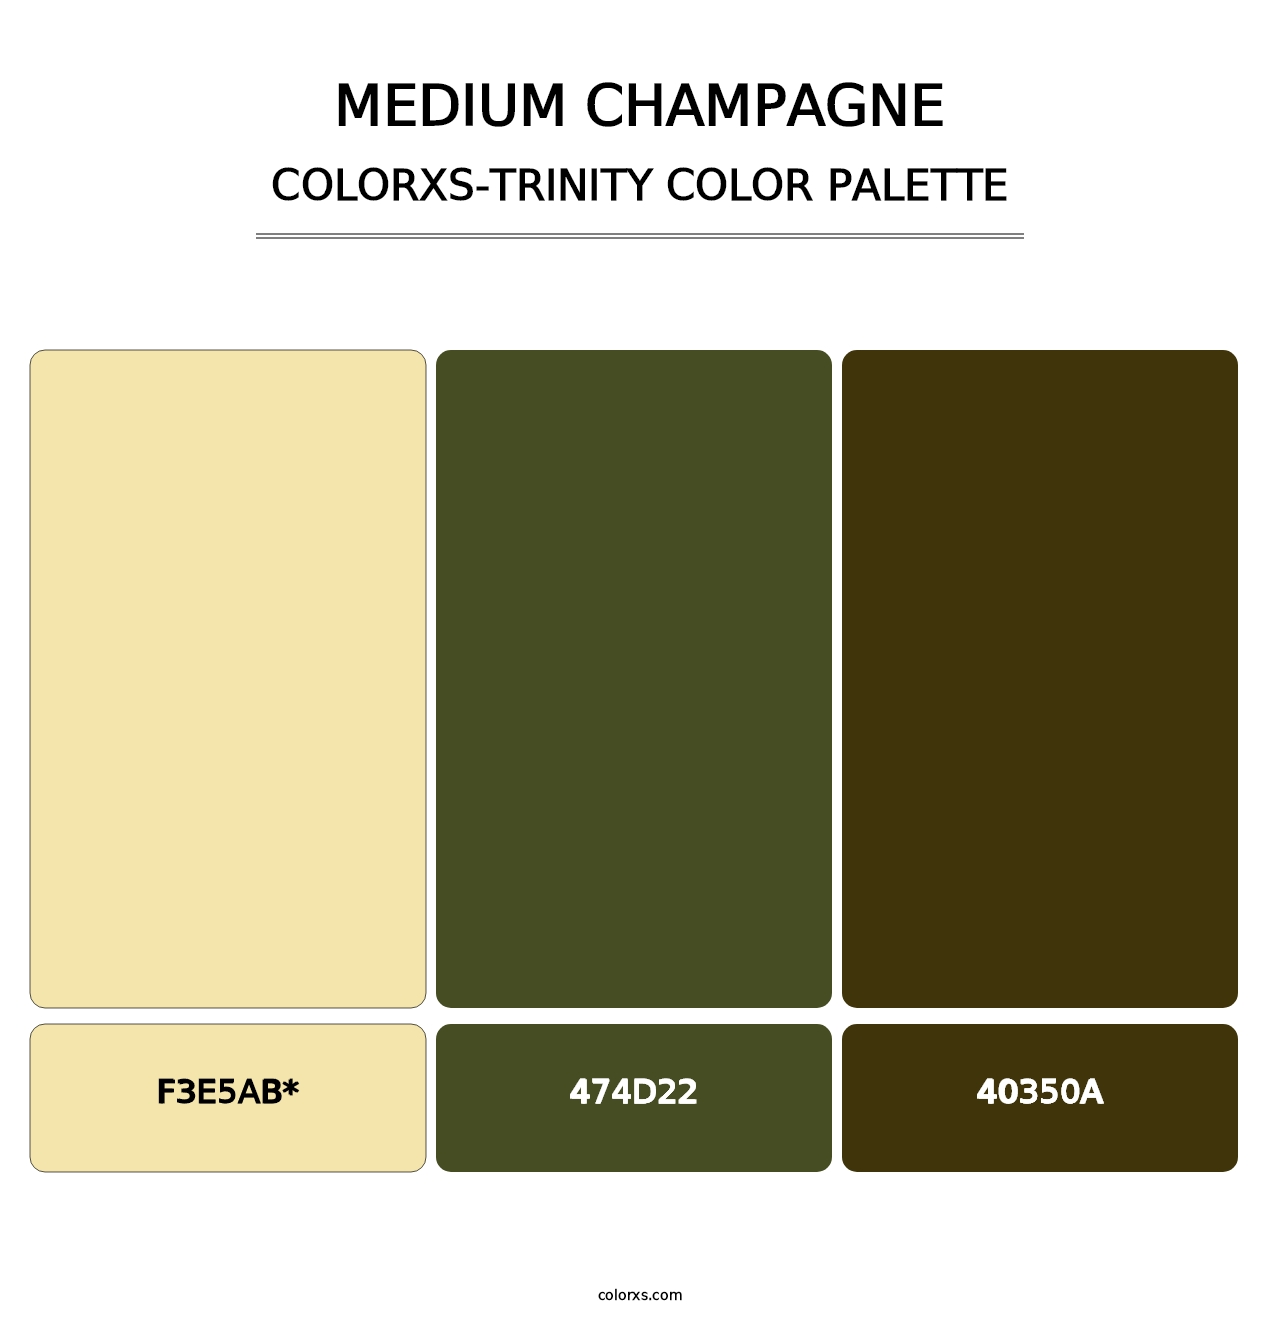 Medium Champagne - Colorxs Trinity Palette